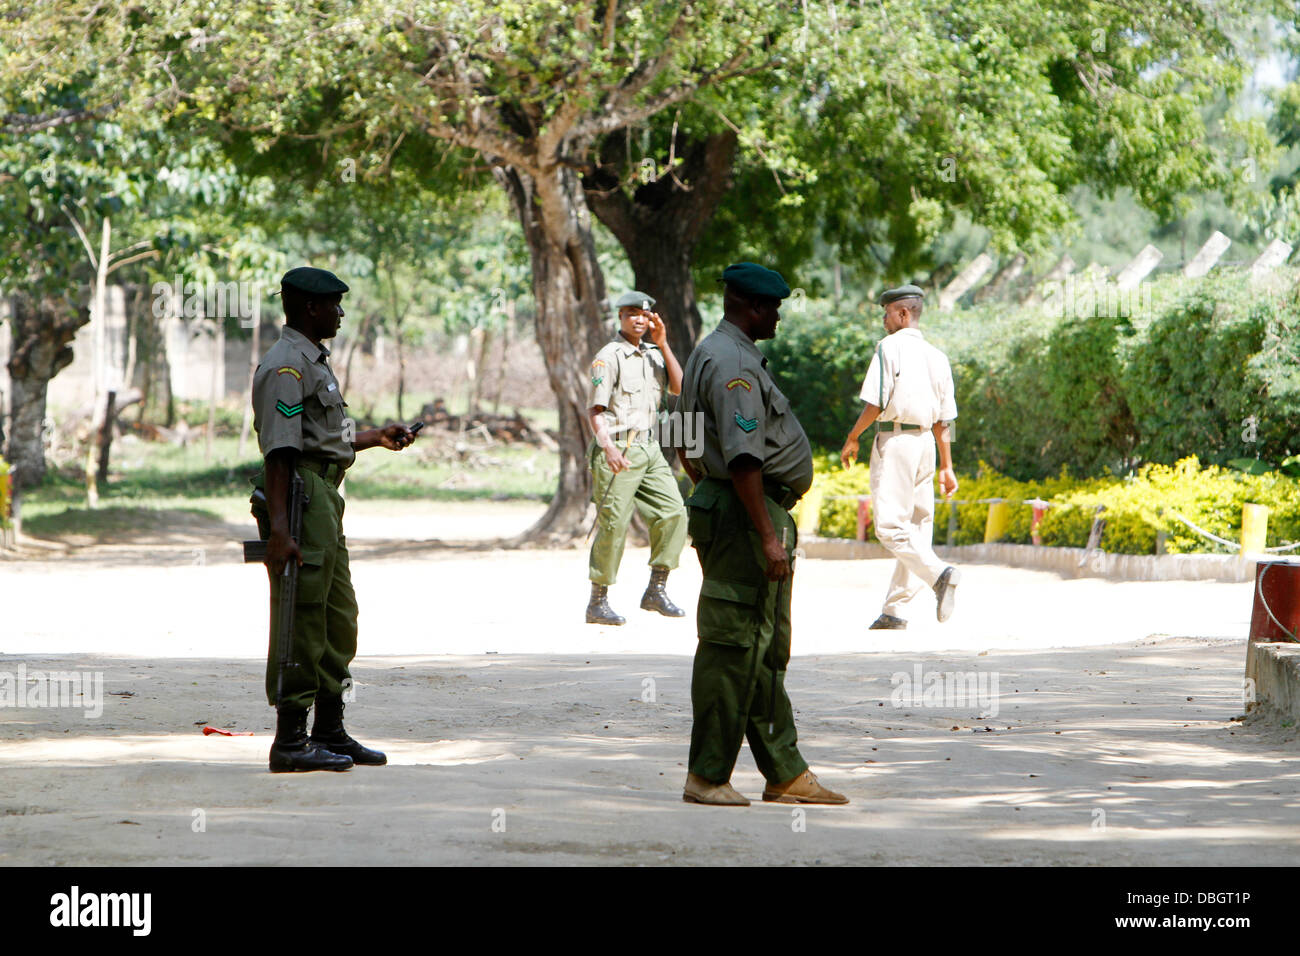 Bewaffnete Wachen im inneren Gefängnis Shimo La Tewa, Mombasa, Kenia. Stockfoto